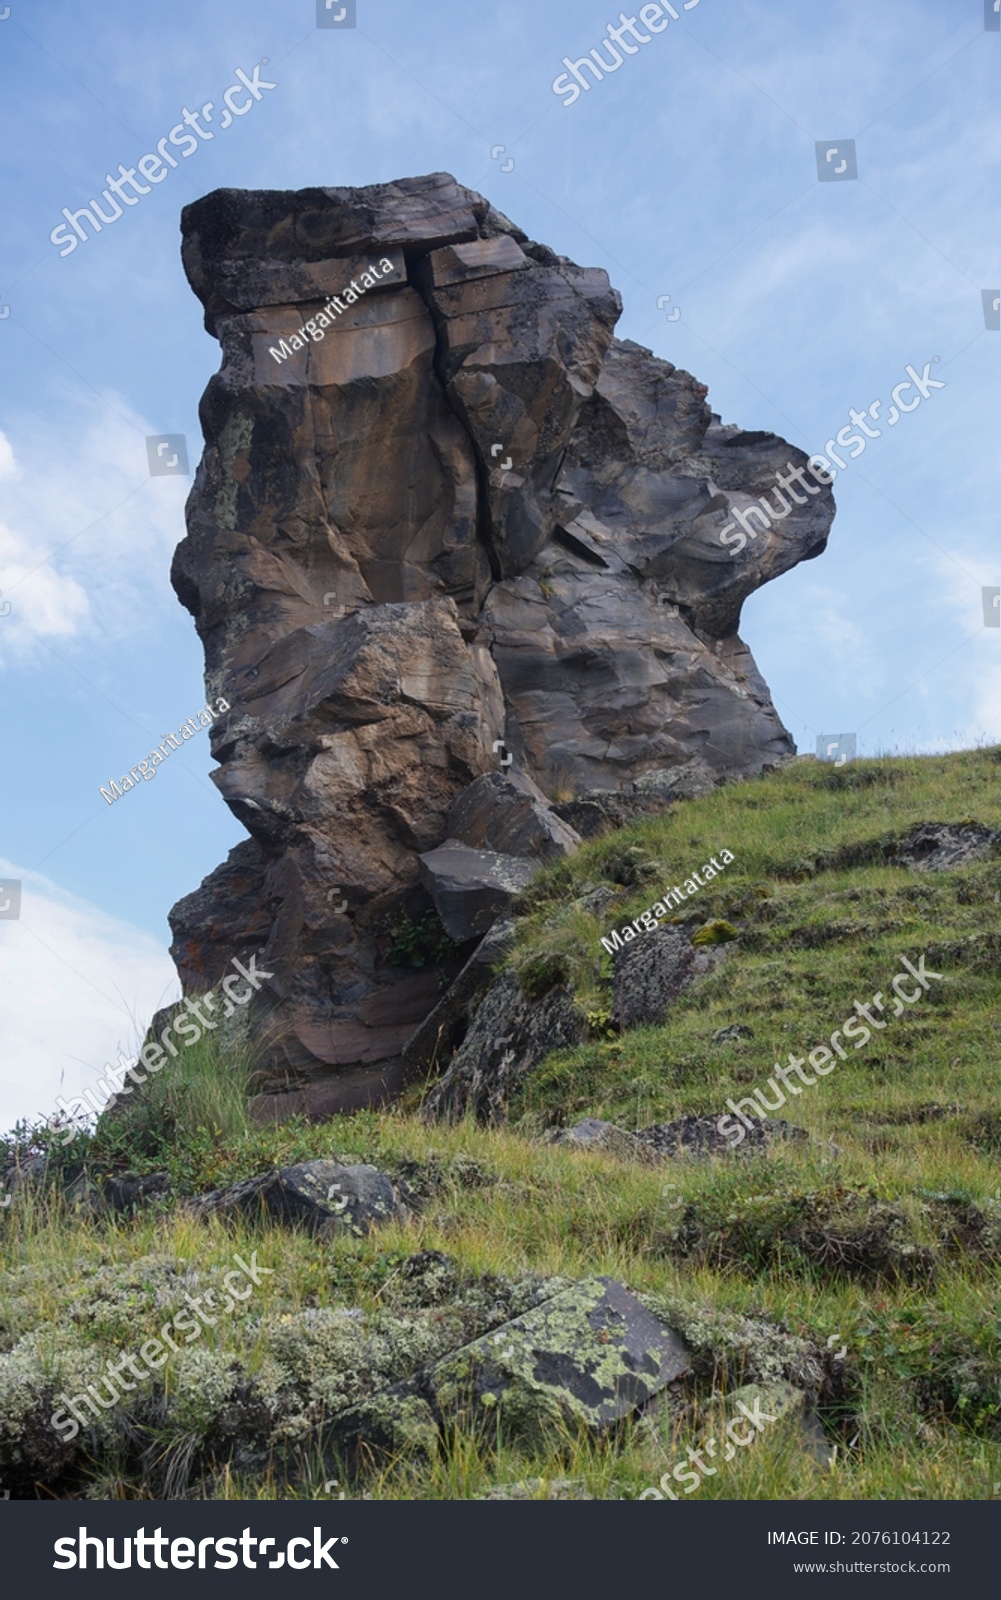 73,682 Tall Rocks Images, Stock Photos & Vectors | Shutterstock